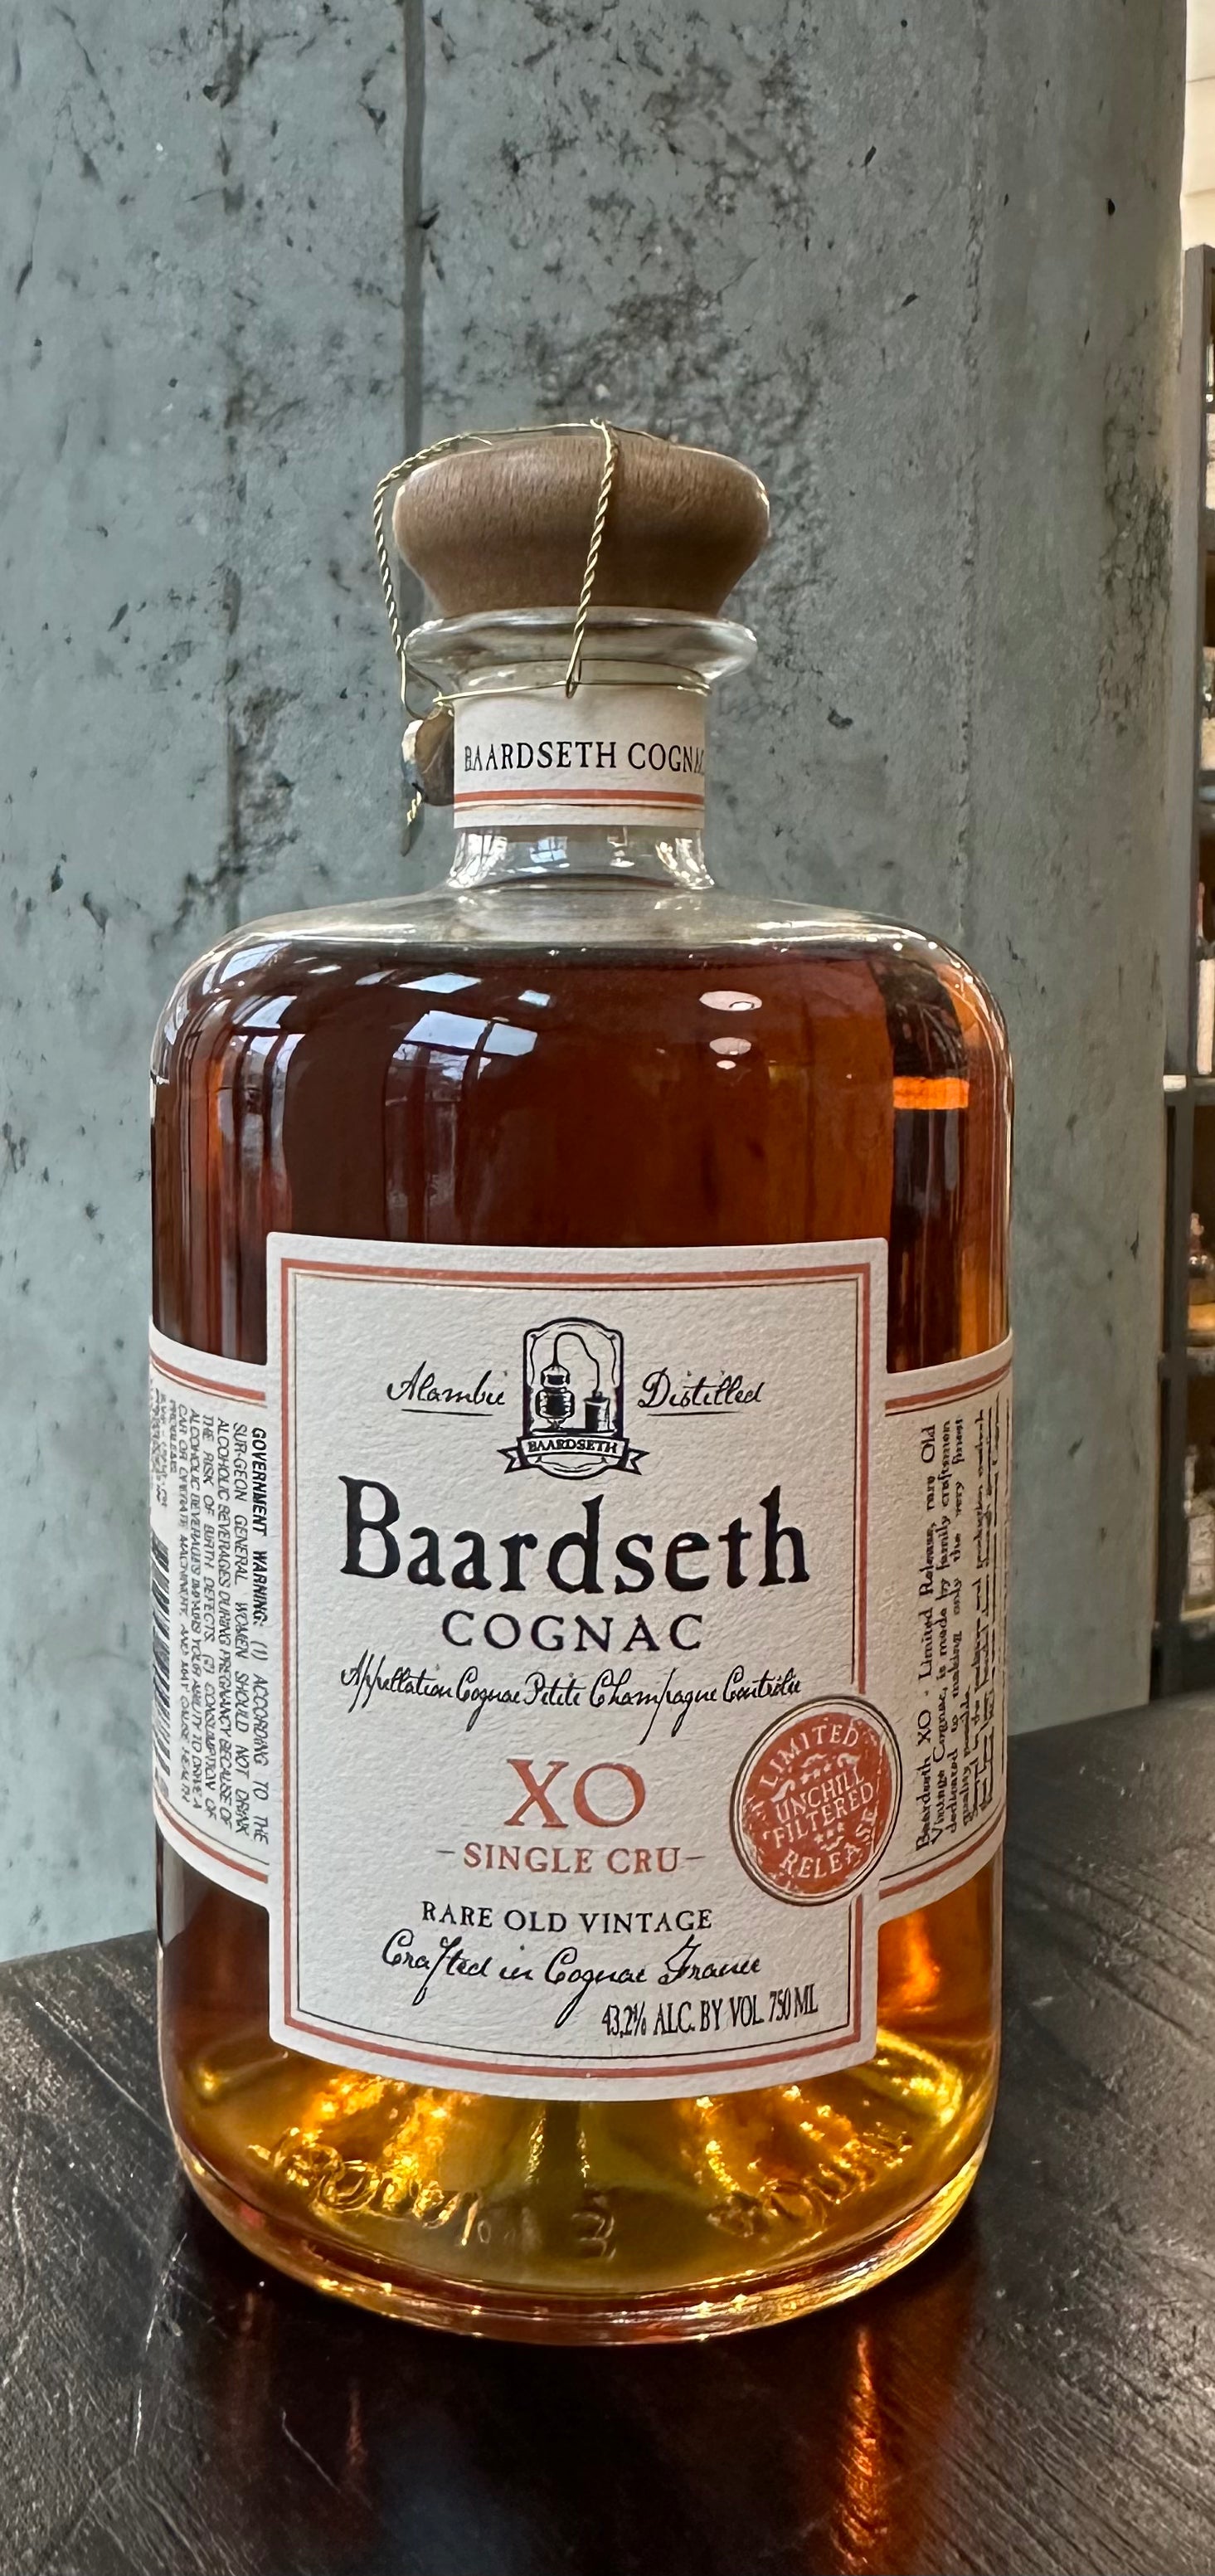 Baardseth Cognac XO, Limited Release